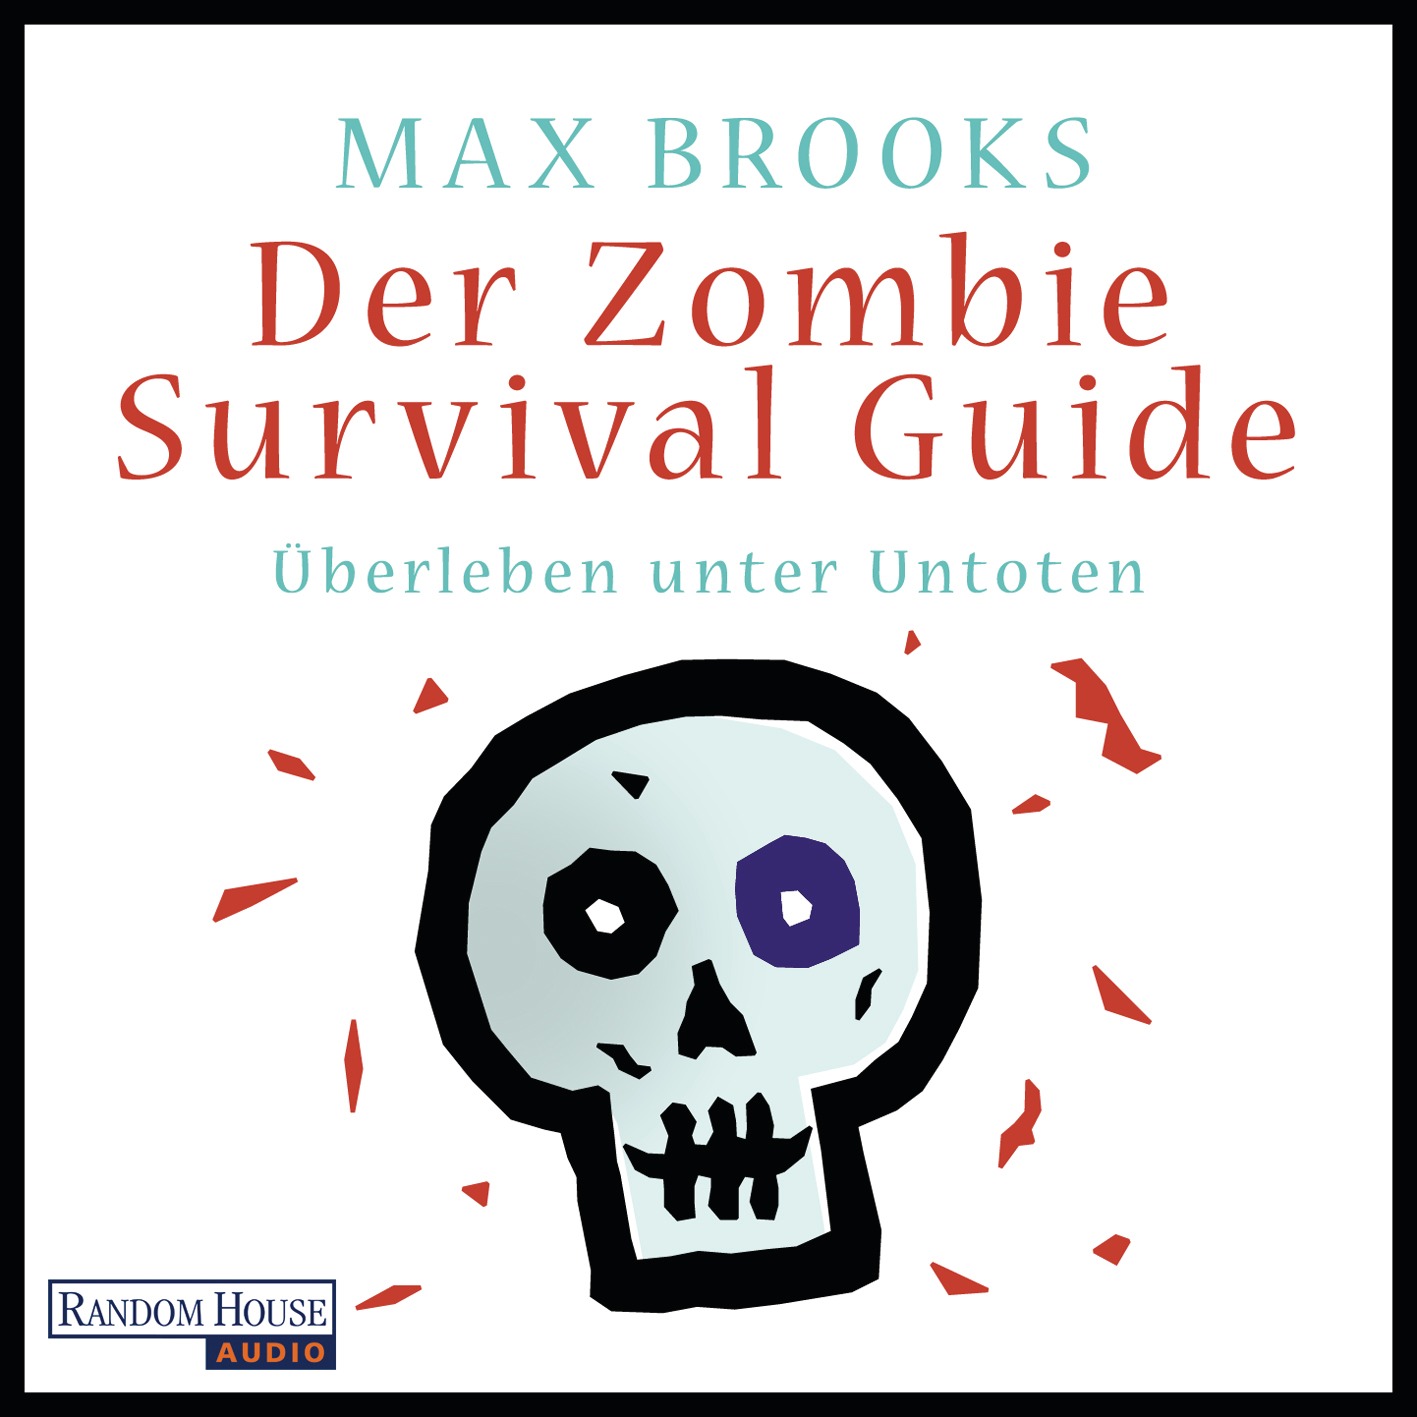 Макс брукс книги. Руководство по выживанию среди зомби Макс Брукс книга.